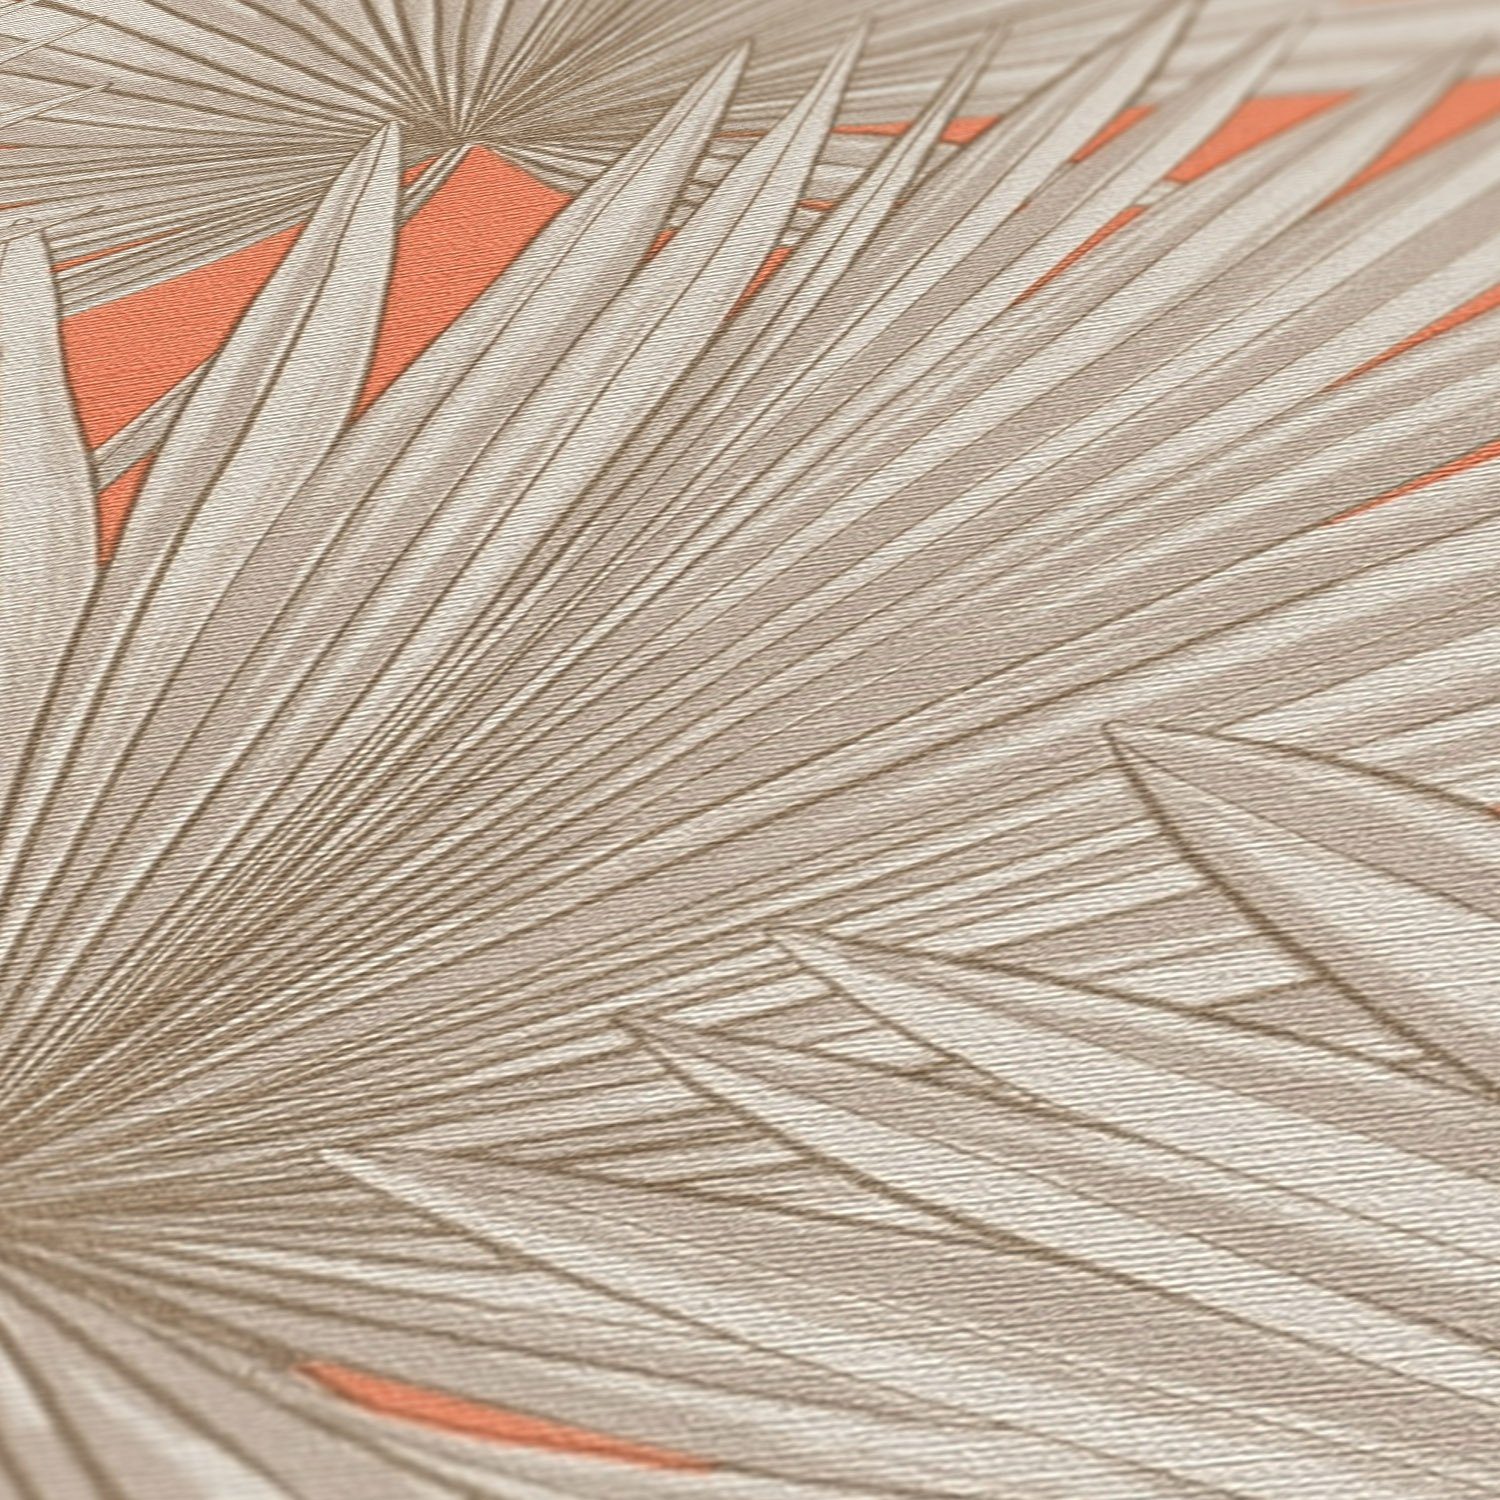 Antigua (1 Tapete geprägt, Palmenblätter, Création beige,natur,orange St), Tapete mit Vliestapete Floral A.S. matt,